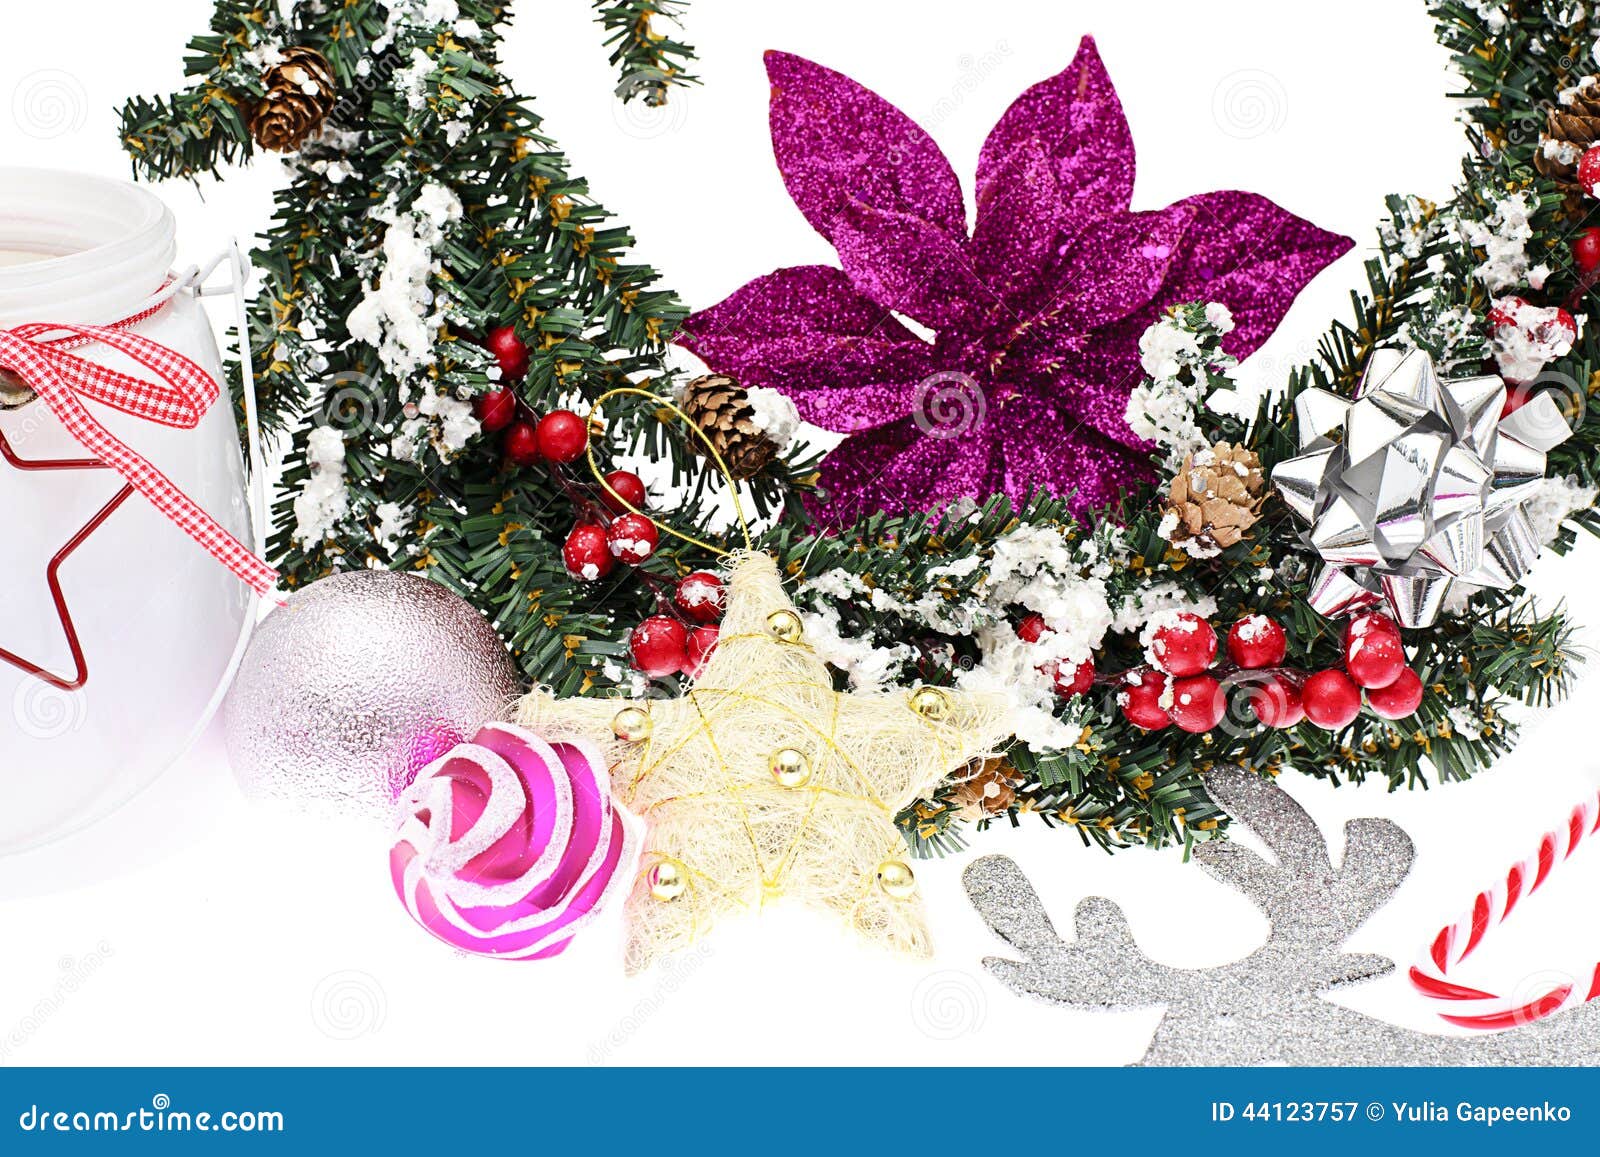 Elegant Classic Christmas Background Card for Stock Image - Image of ...